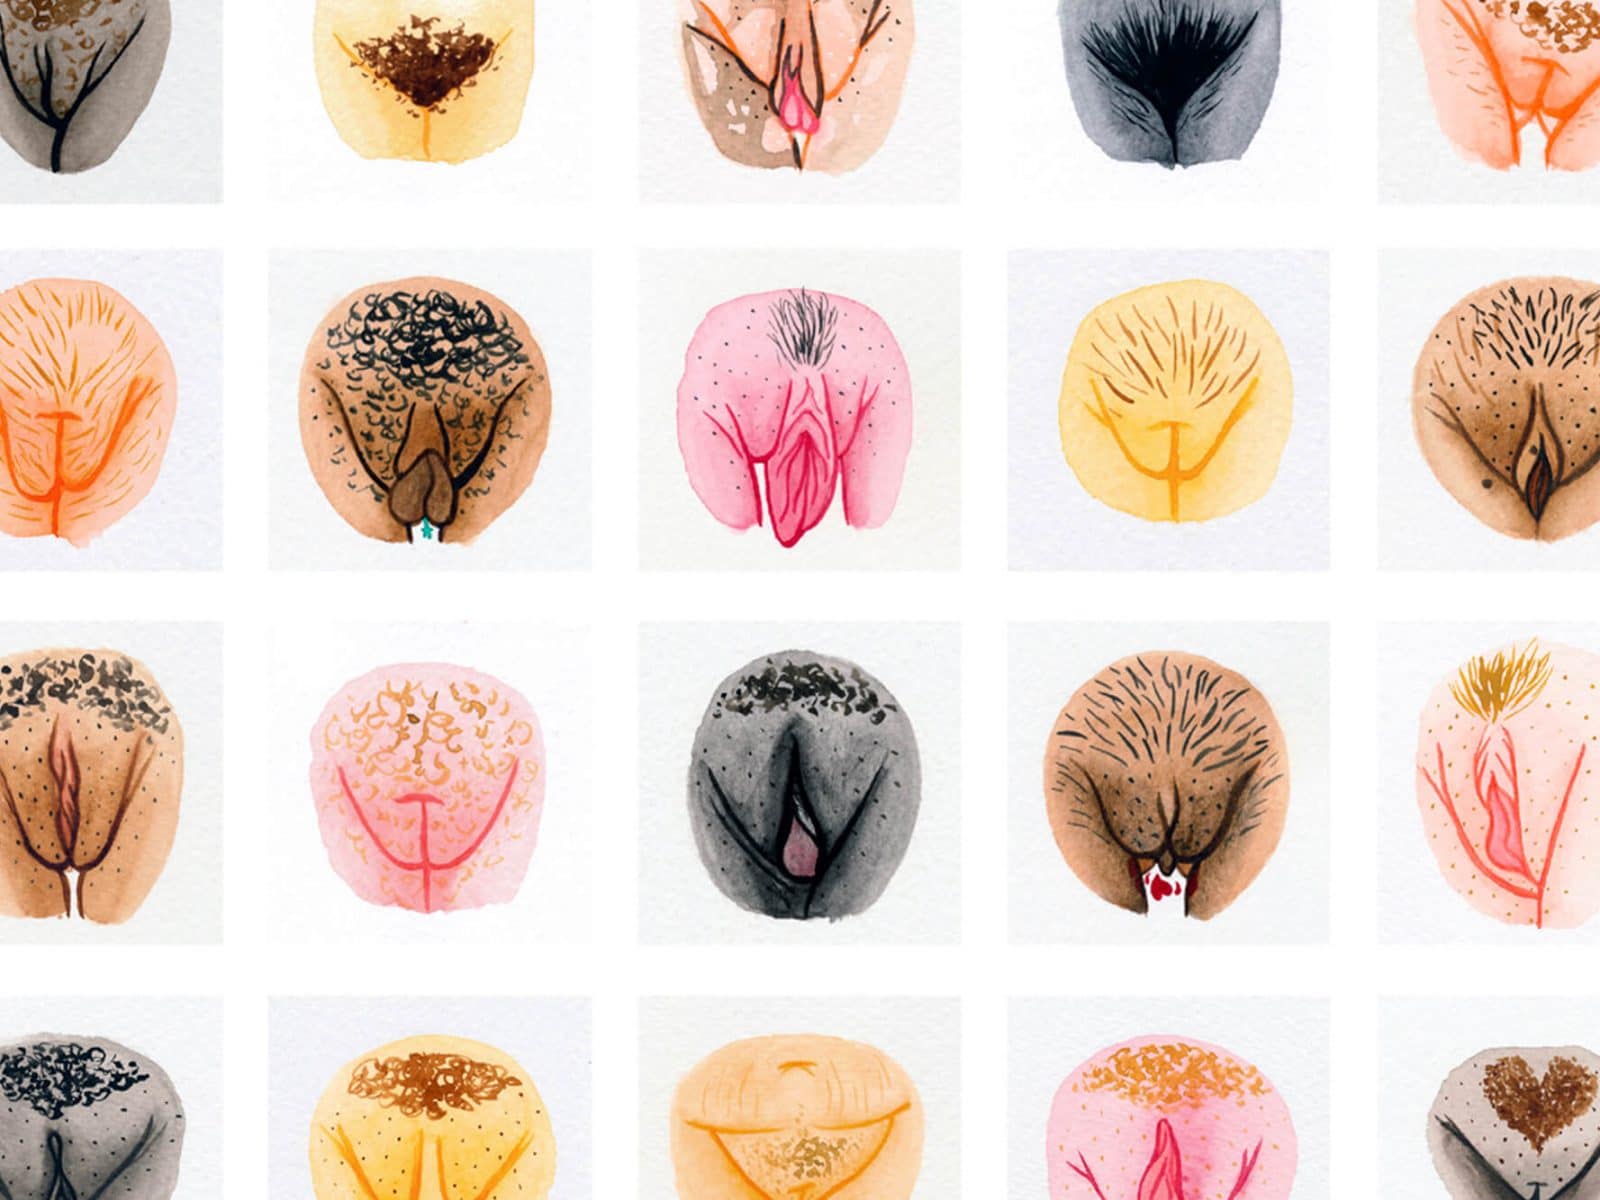 The Vulva Gallery: Every vulva is beautiful - O*Diaries